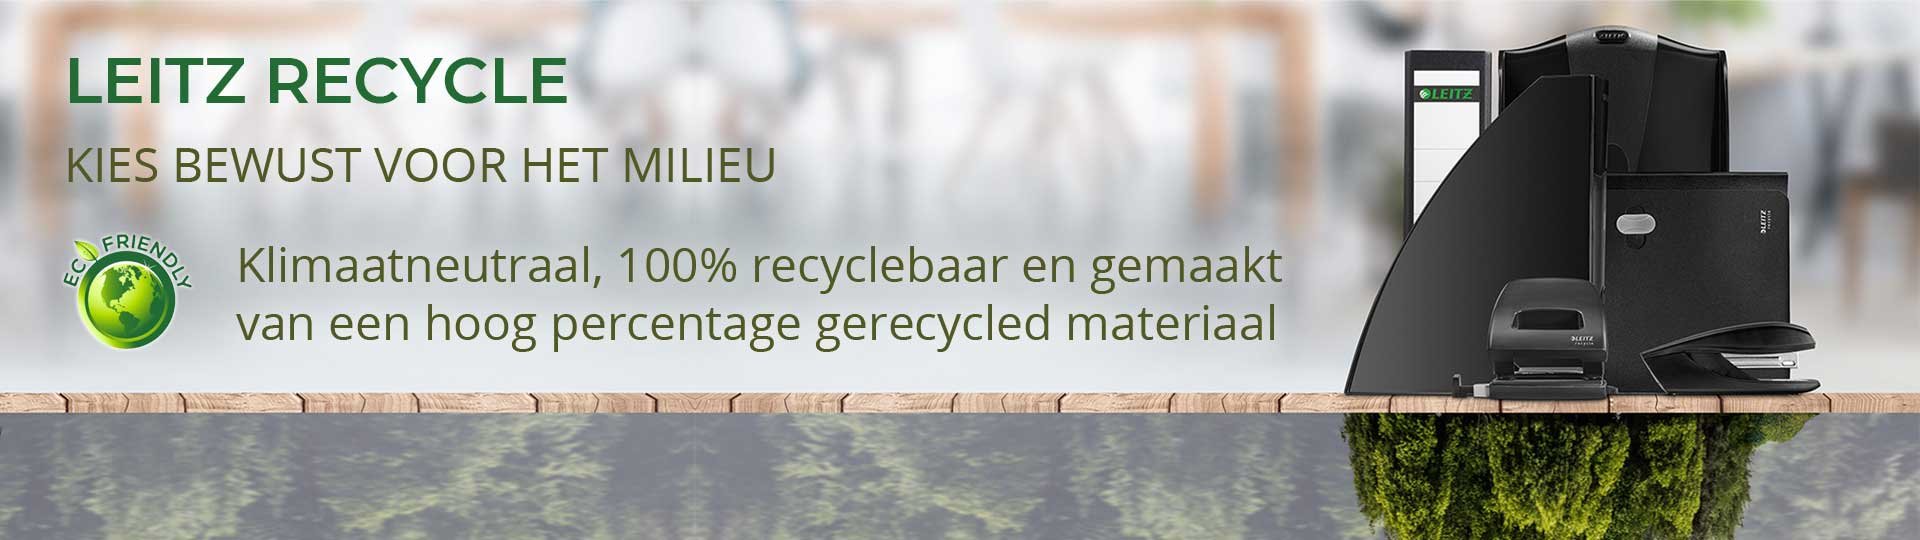 Leitz recycle | oxeurope.nl